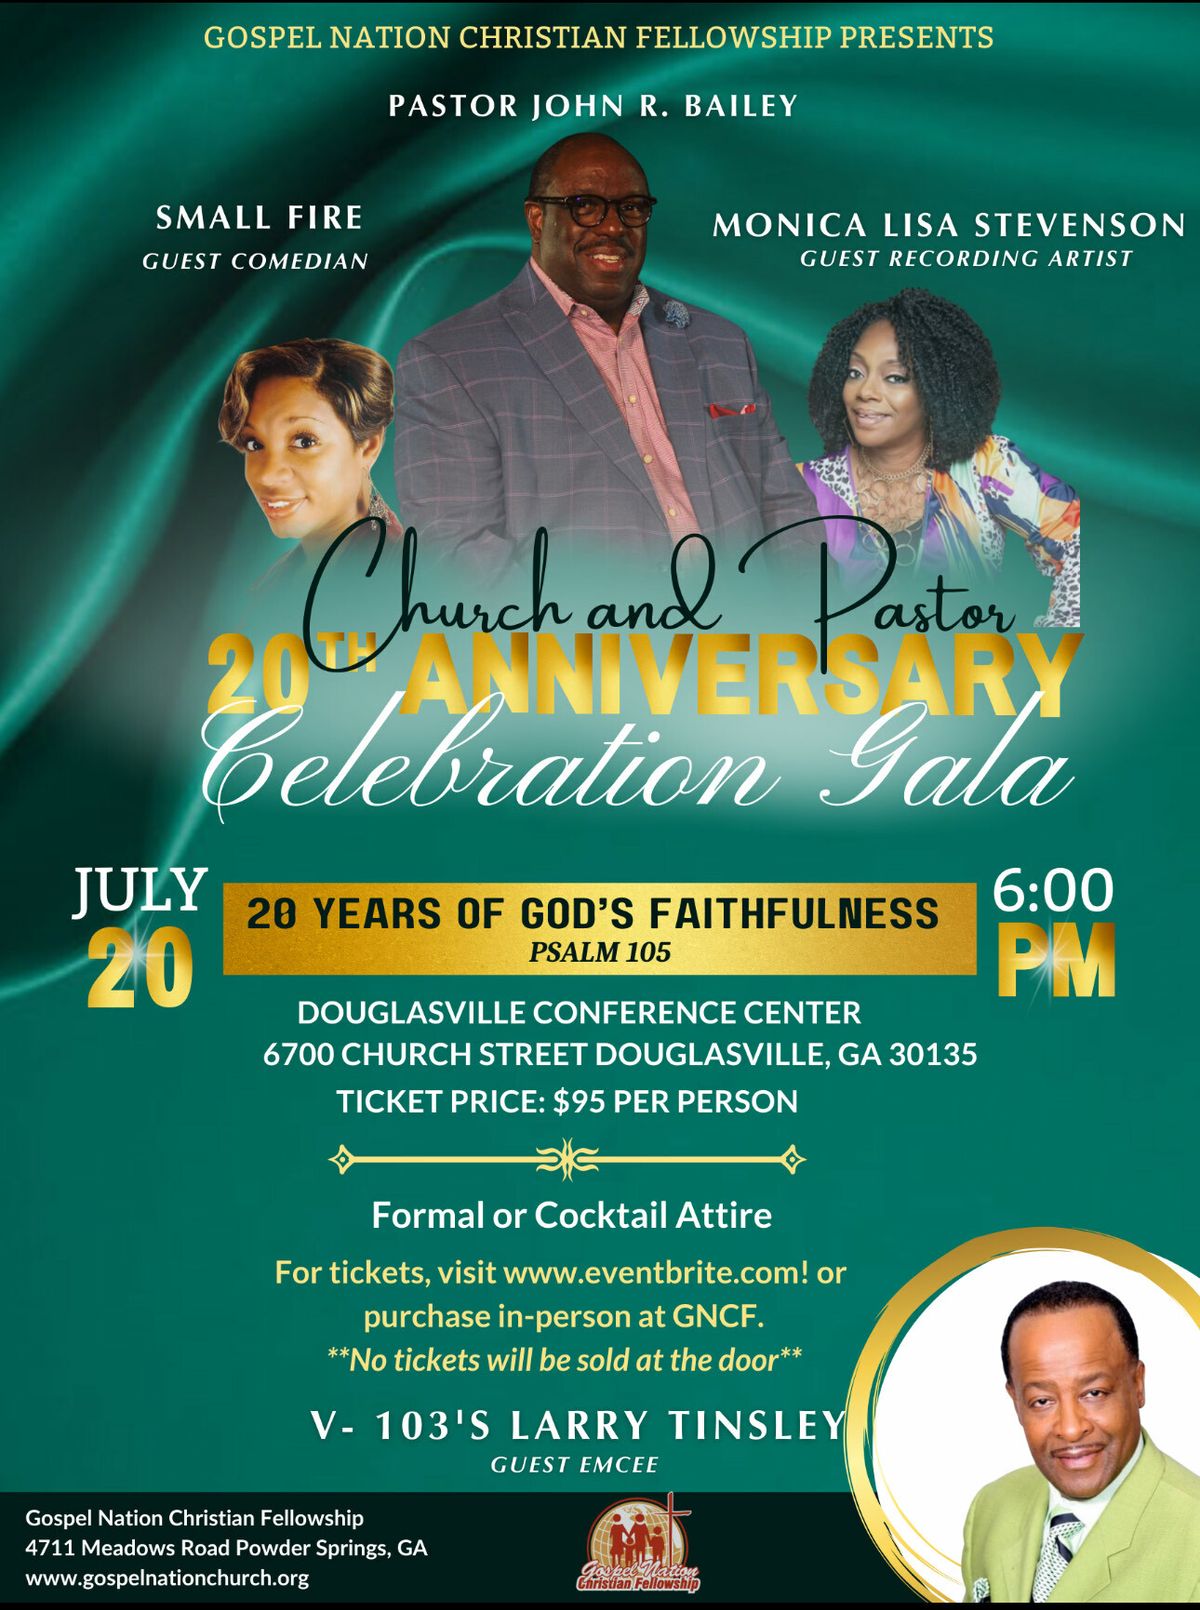 Church & Pastor 20th Anniversary Celebration Gala